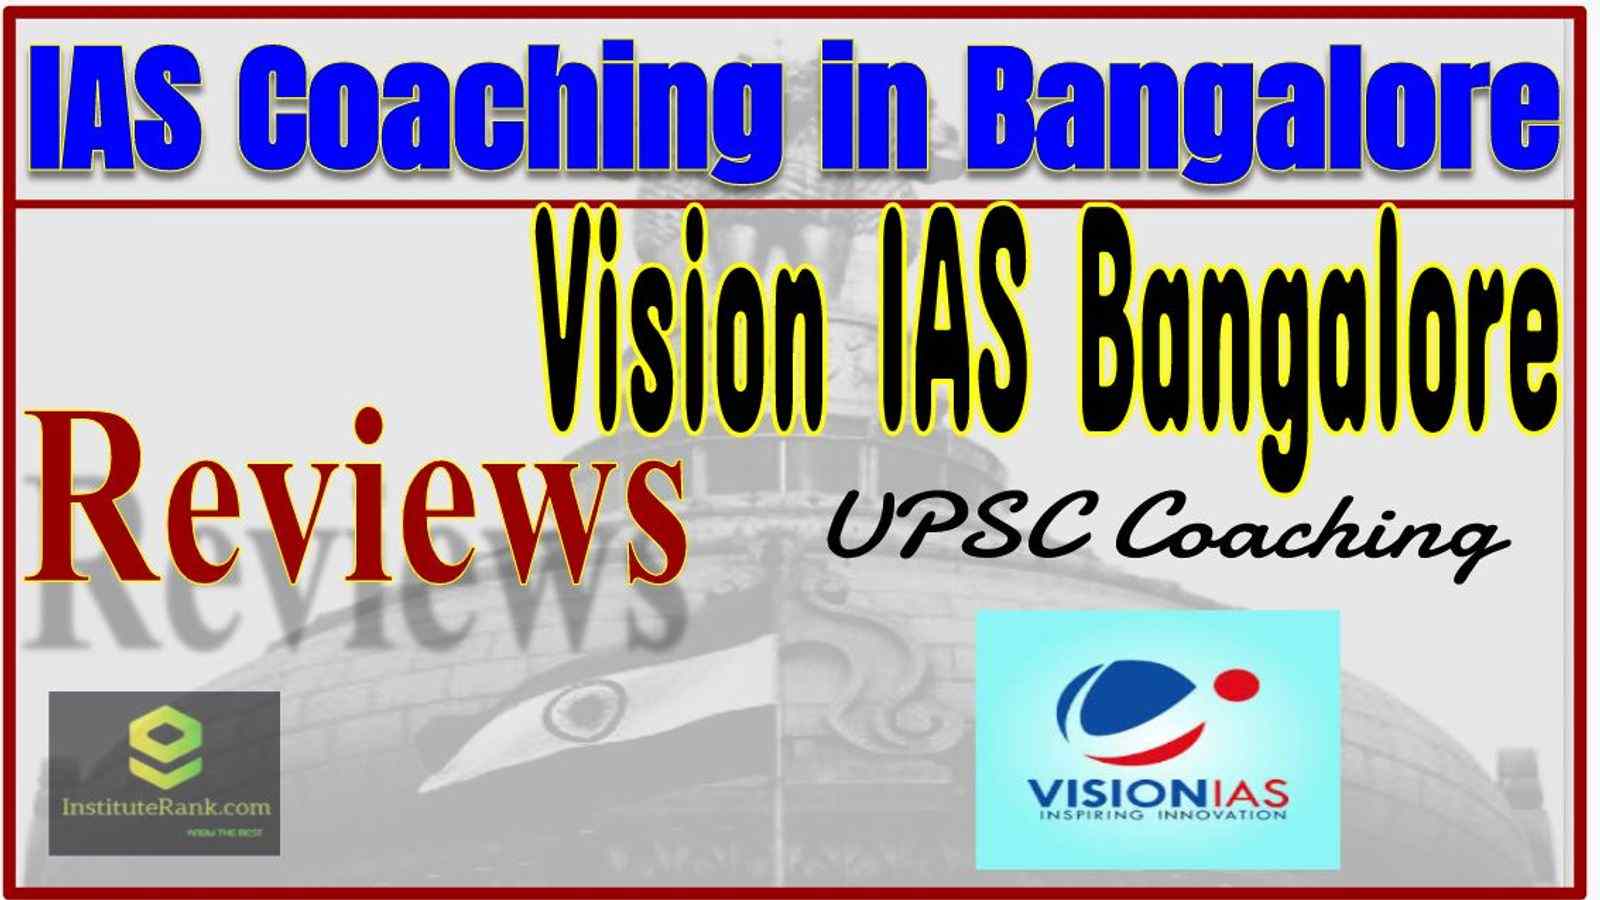 Vision IAS Bangalore Reviews